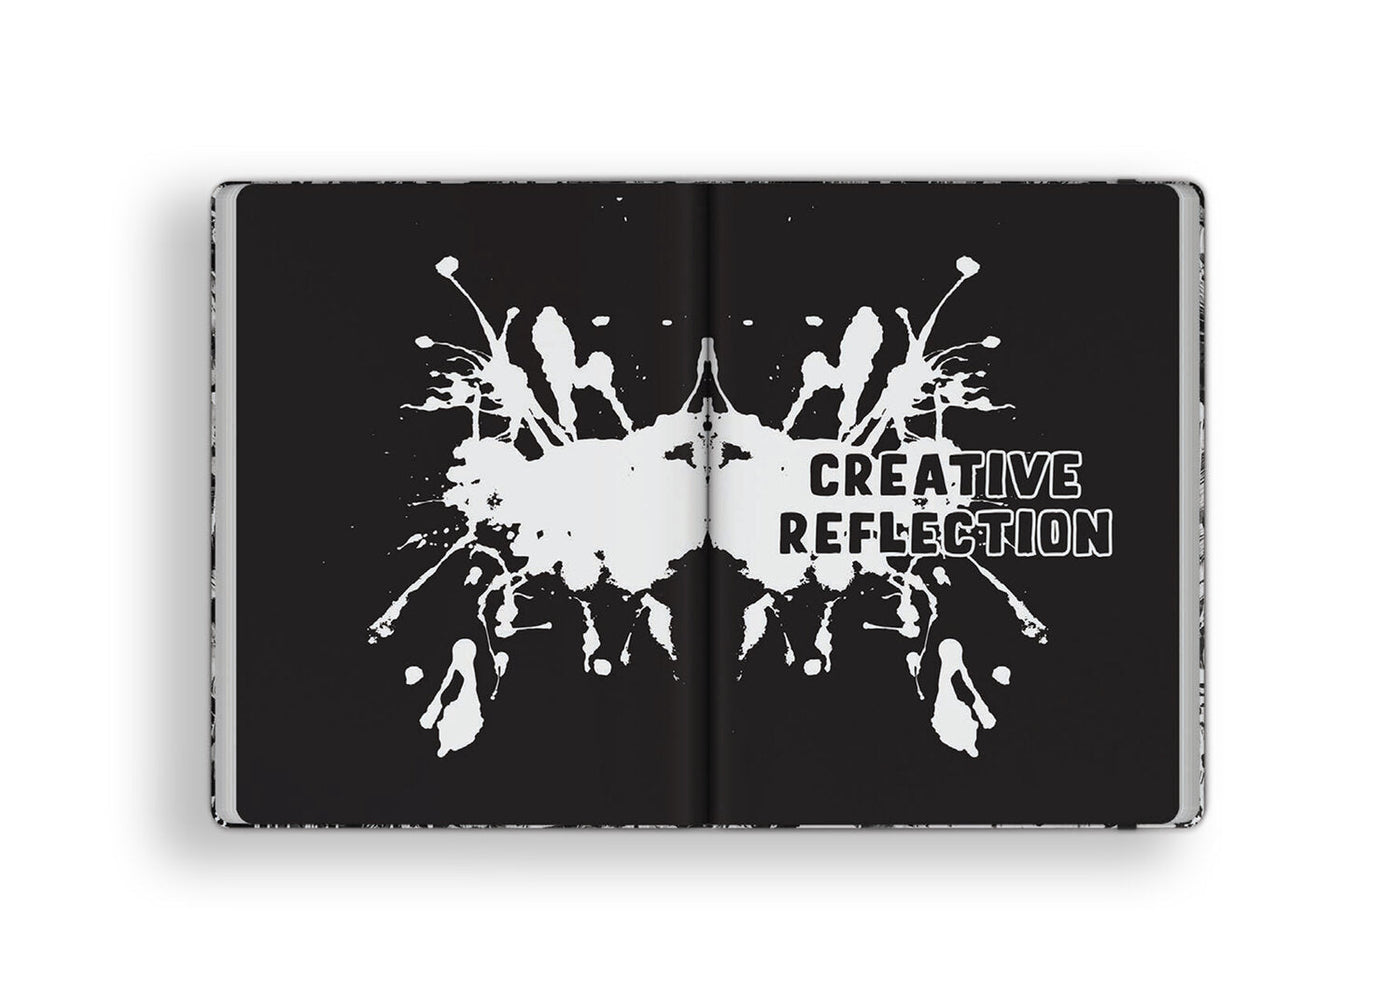 Creative Thinking Journal: Volume 2